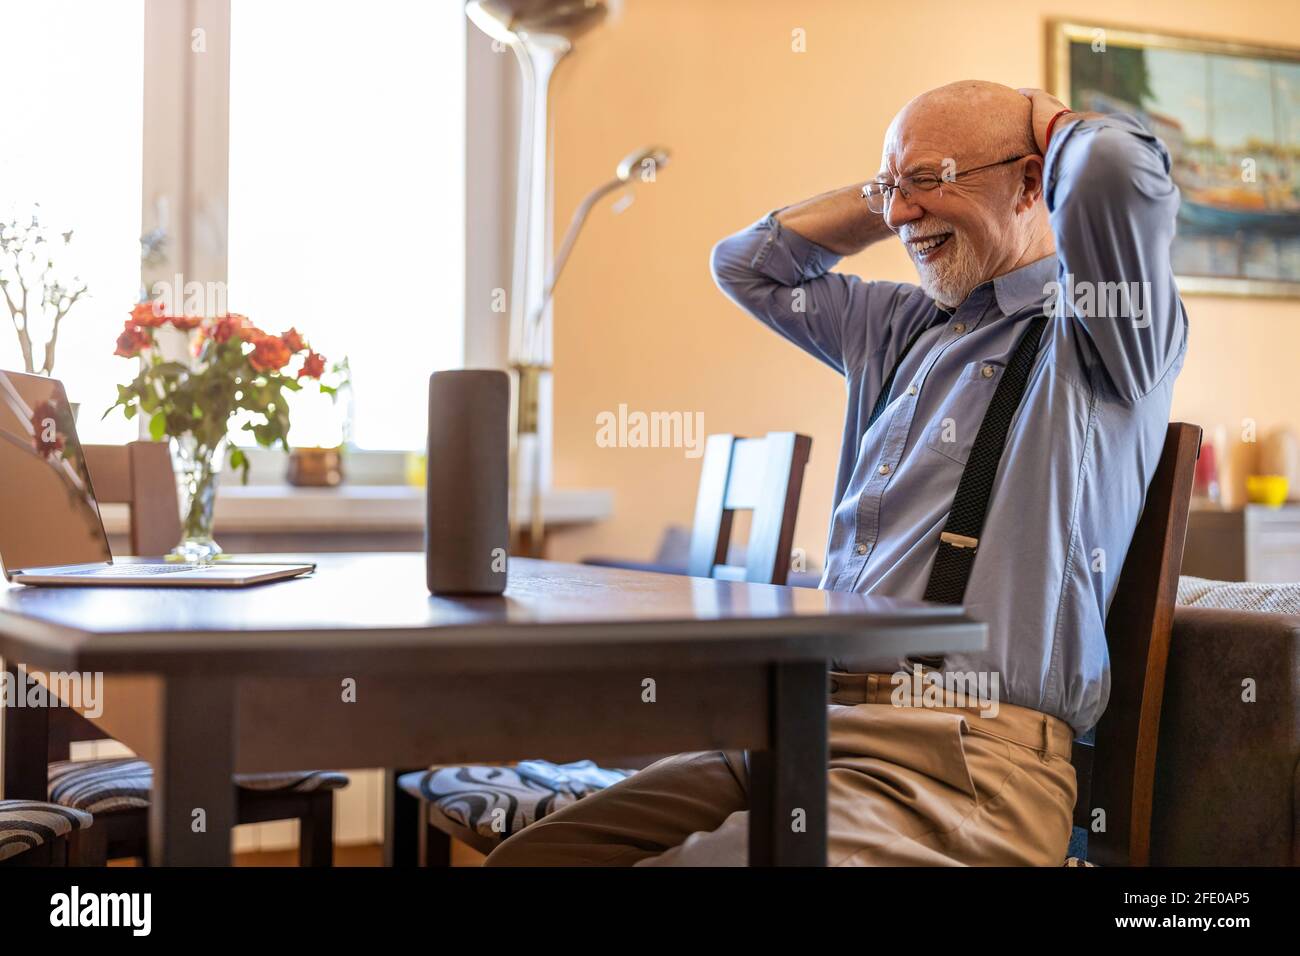 Senior man using Virtual Assistant at home Stock Photo